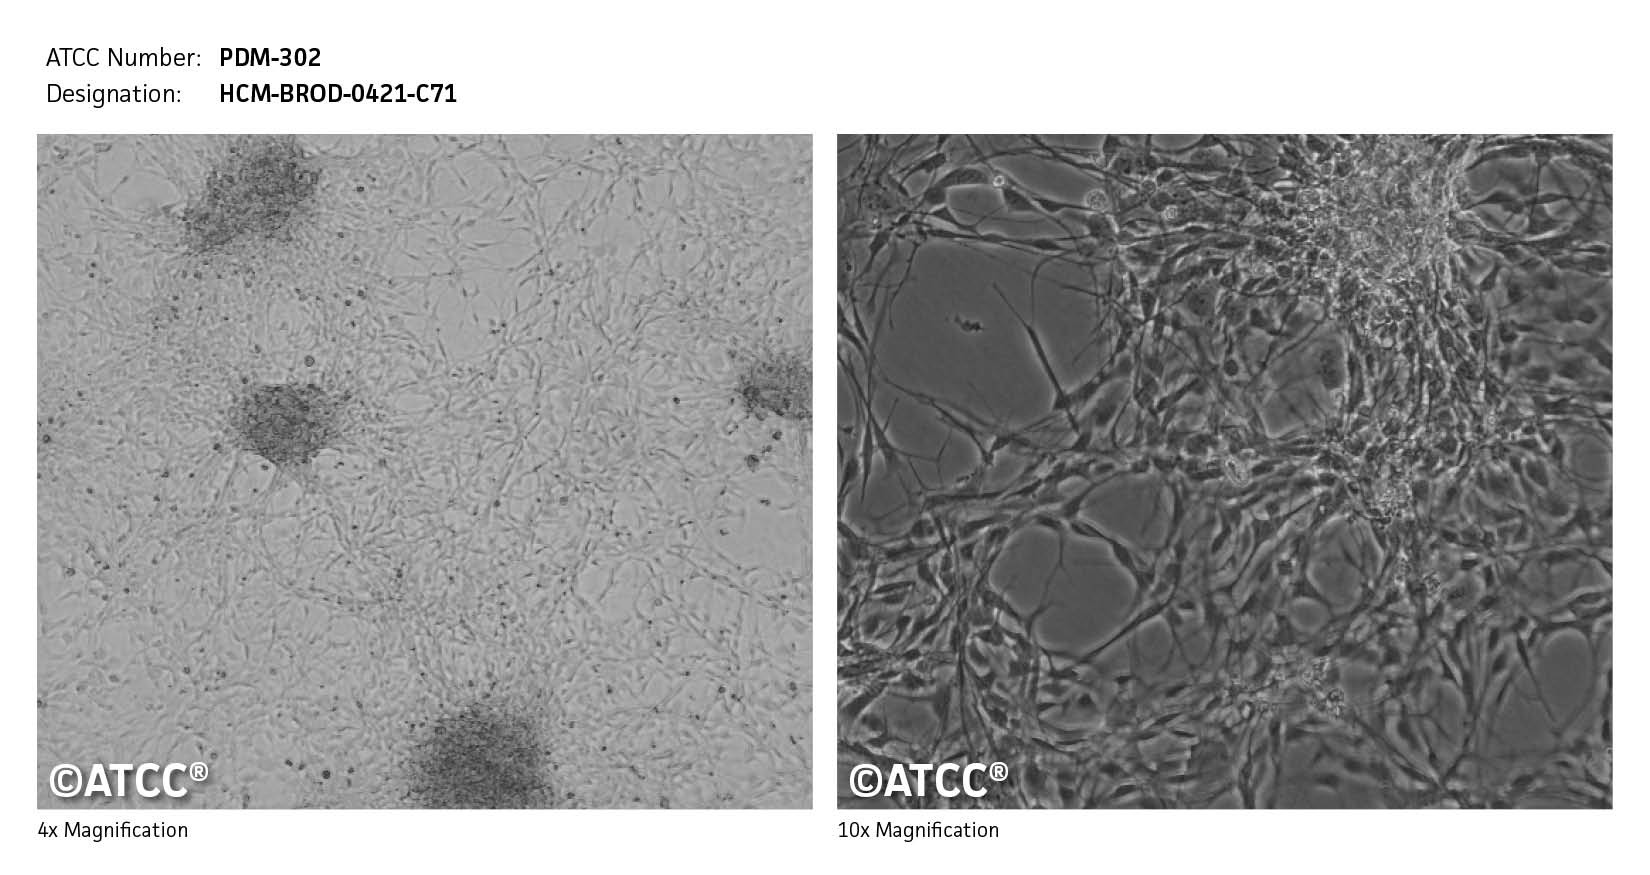 ATCC PDM-302 Cell Micrograph